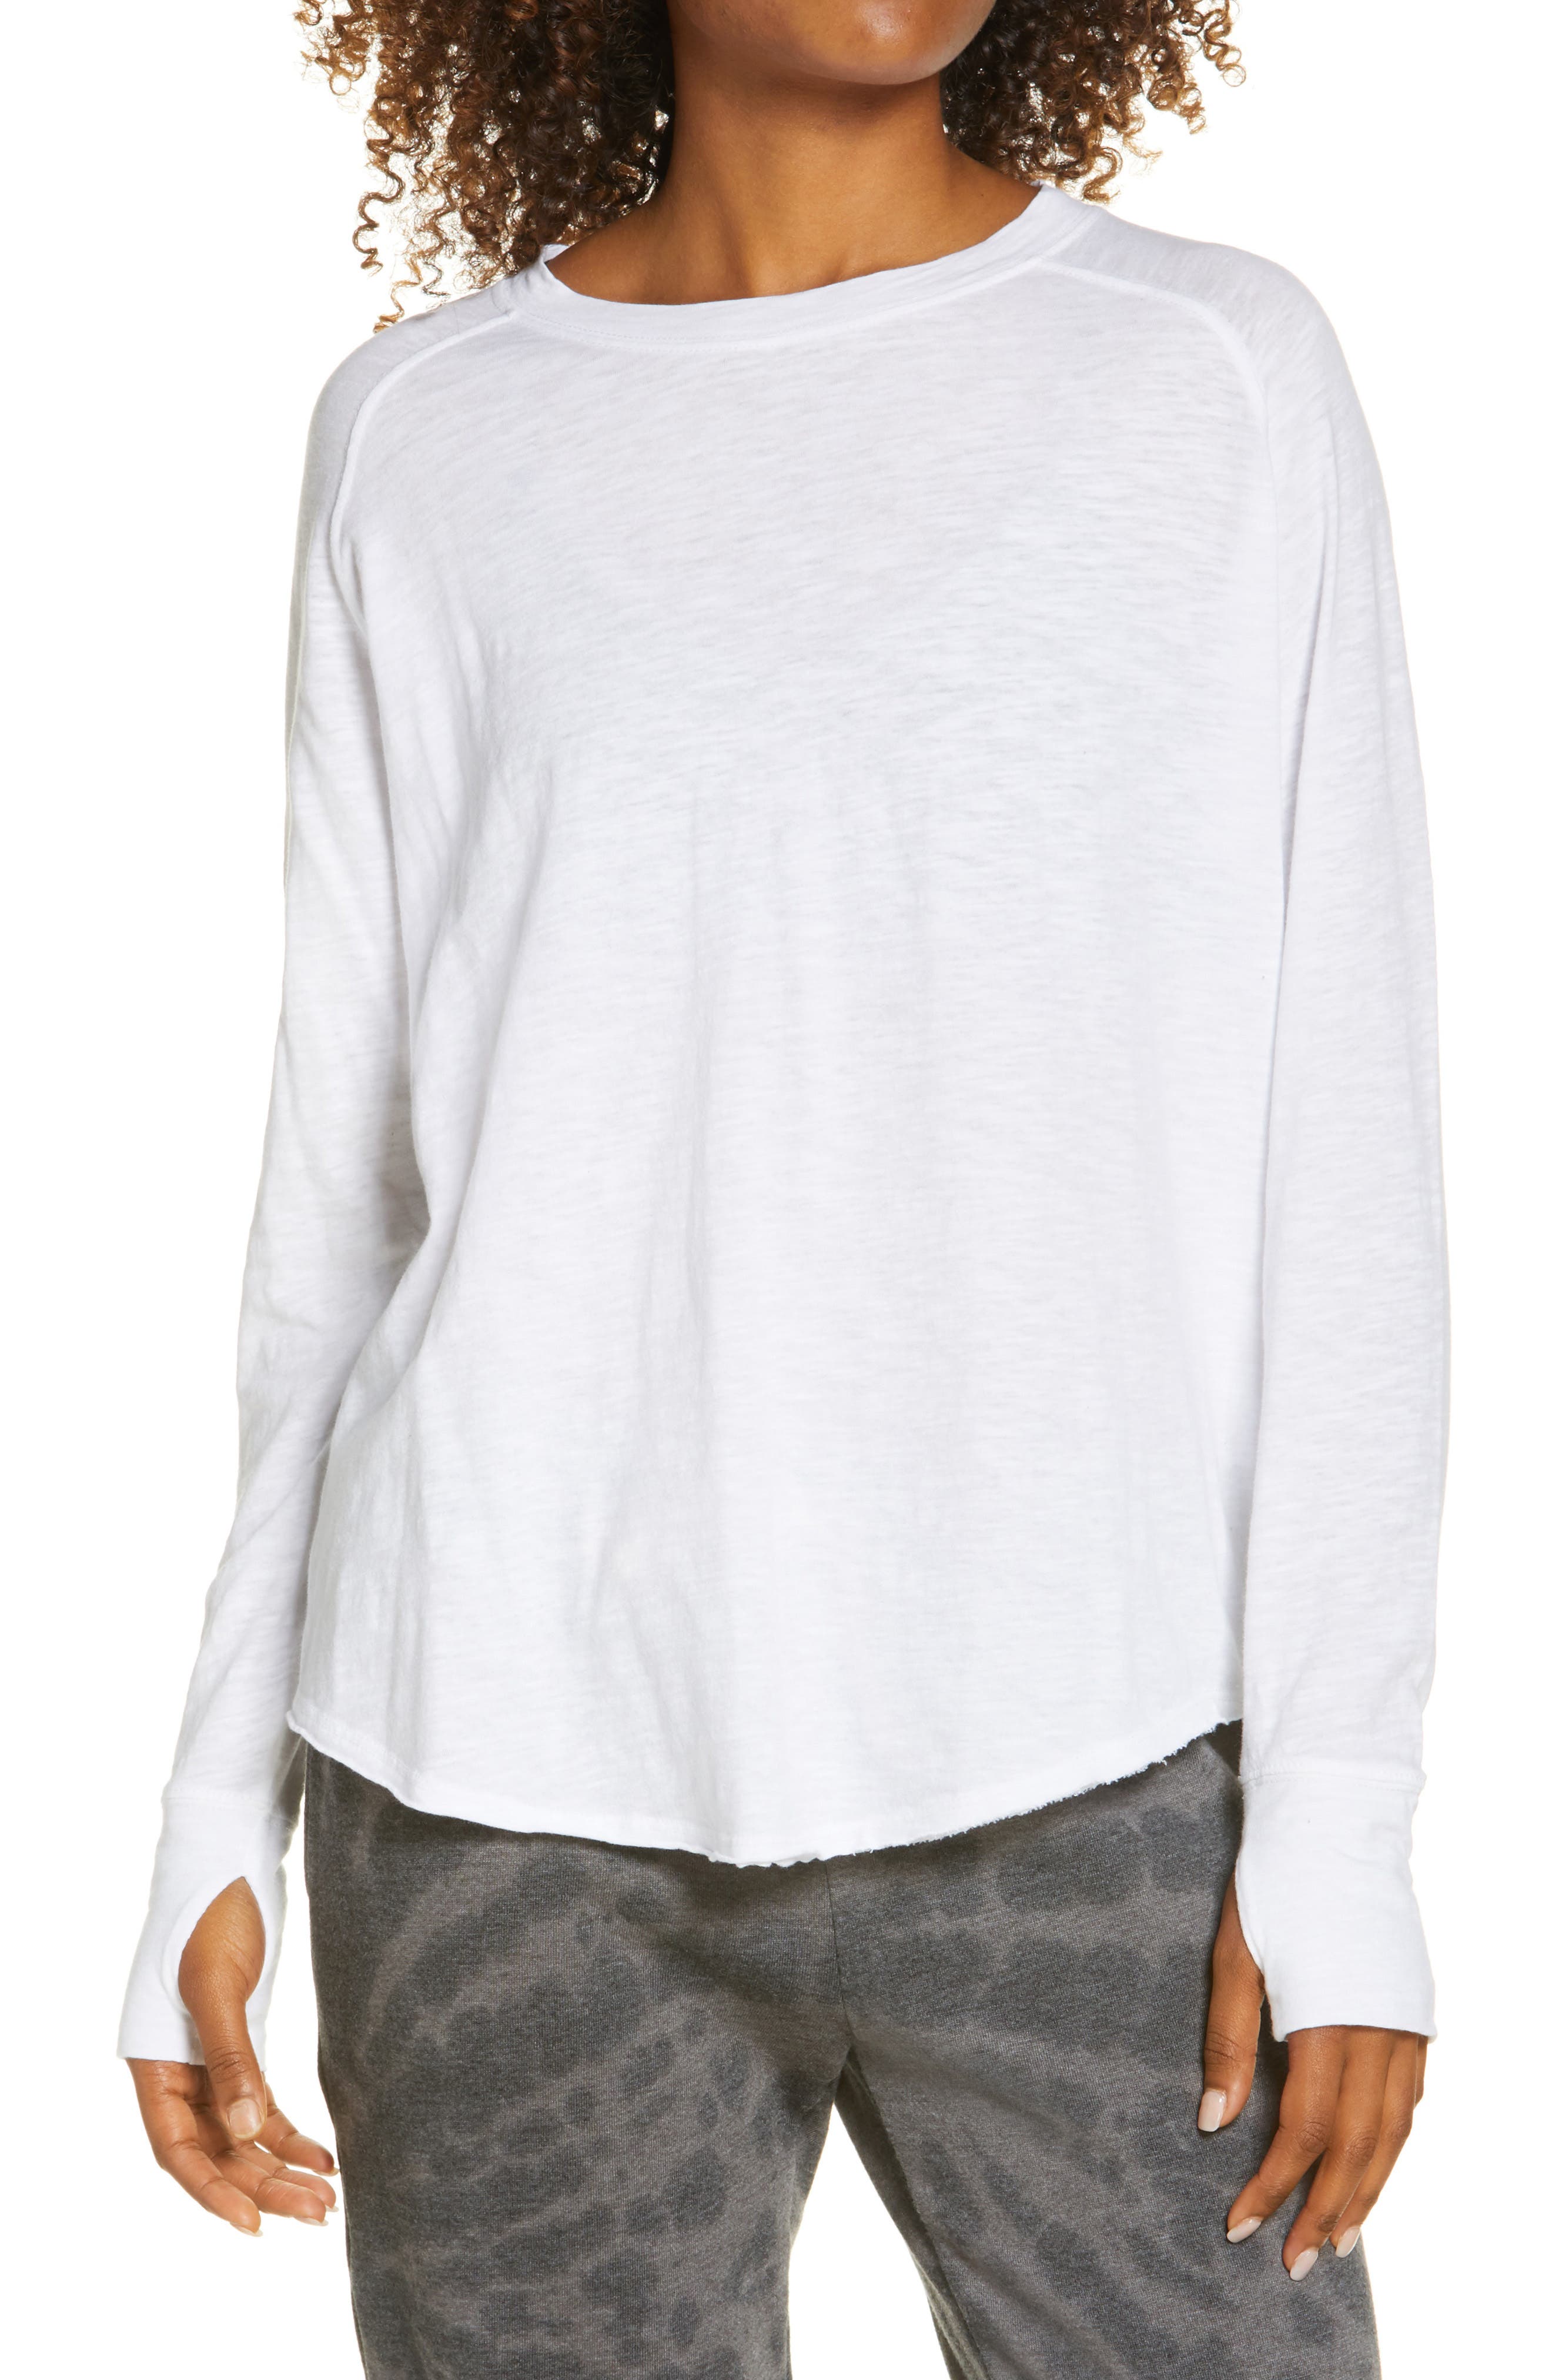 Womens Crop Long Sleeve T Shirt Ladies Short Plain Basic Round Neck Shirts Top 8-14